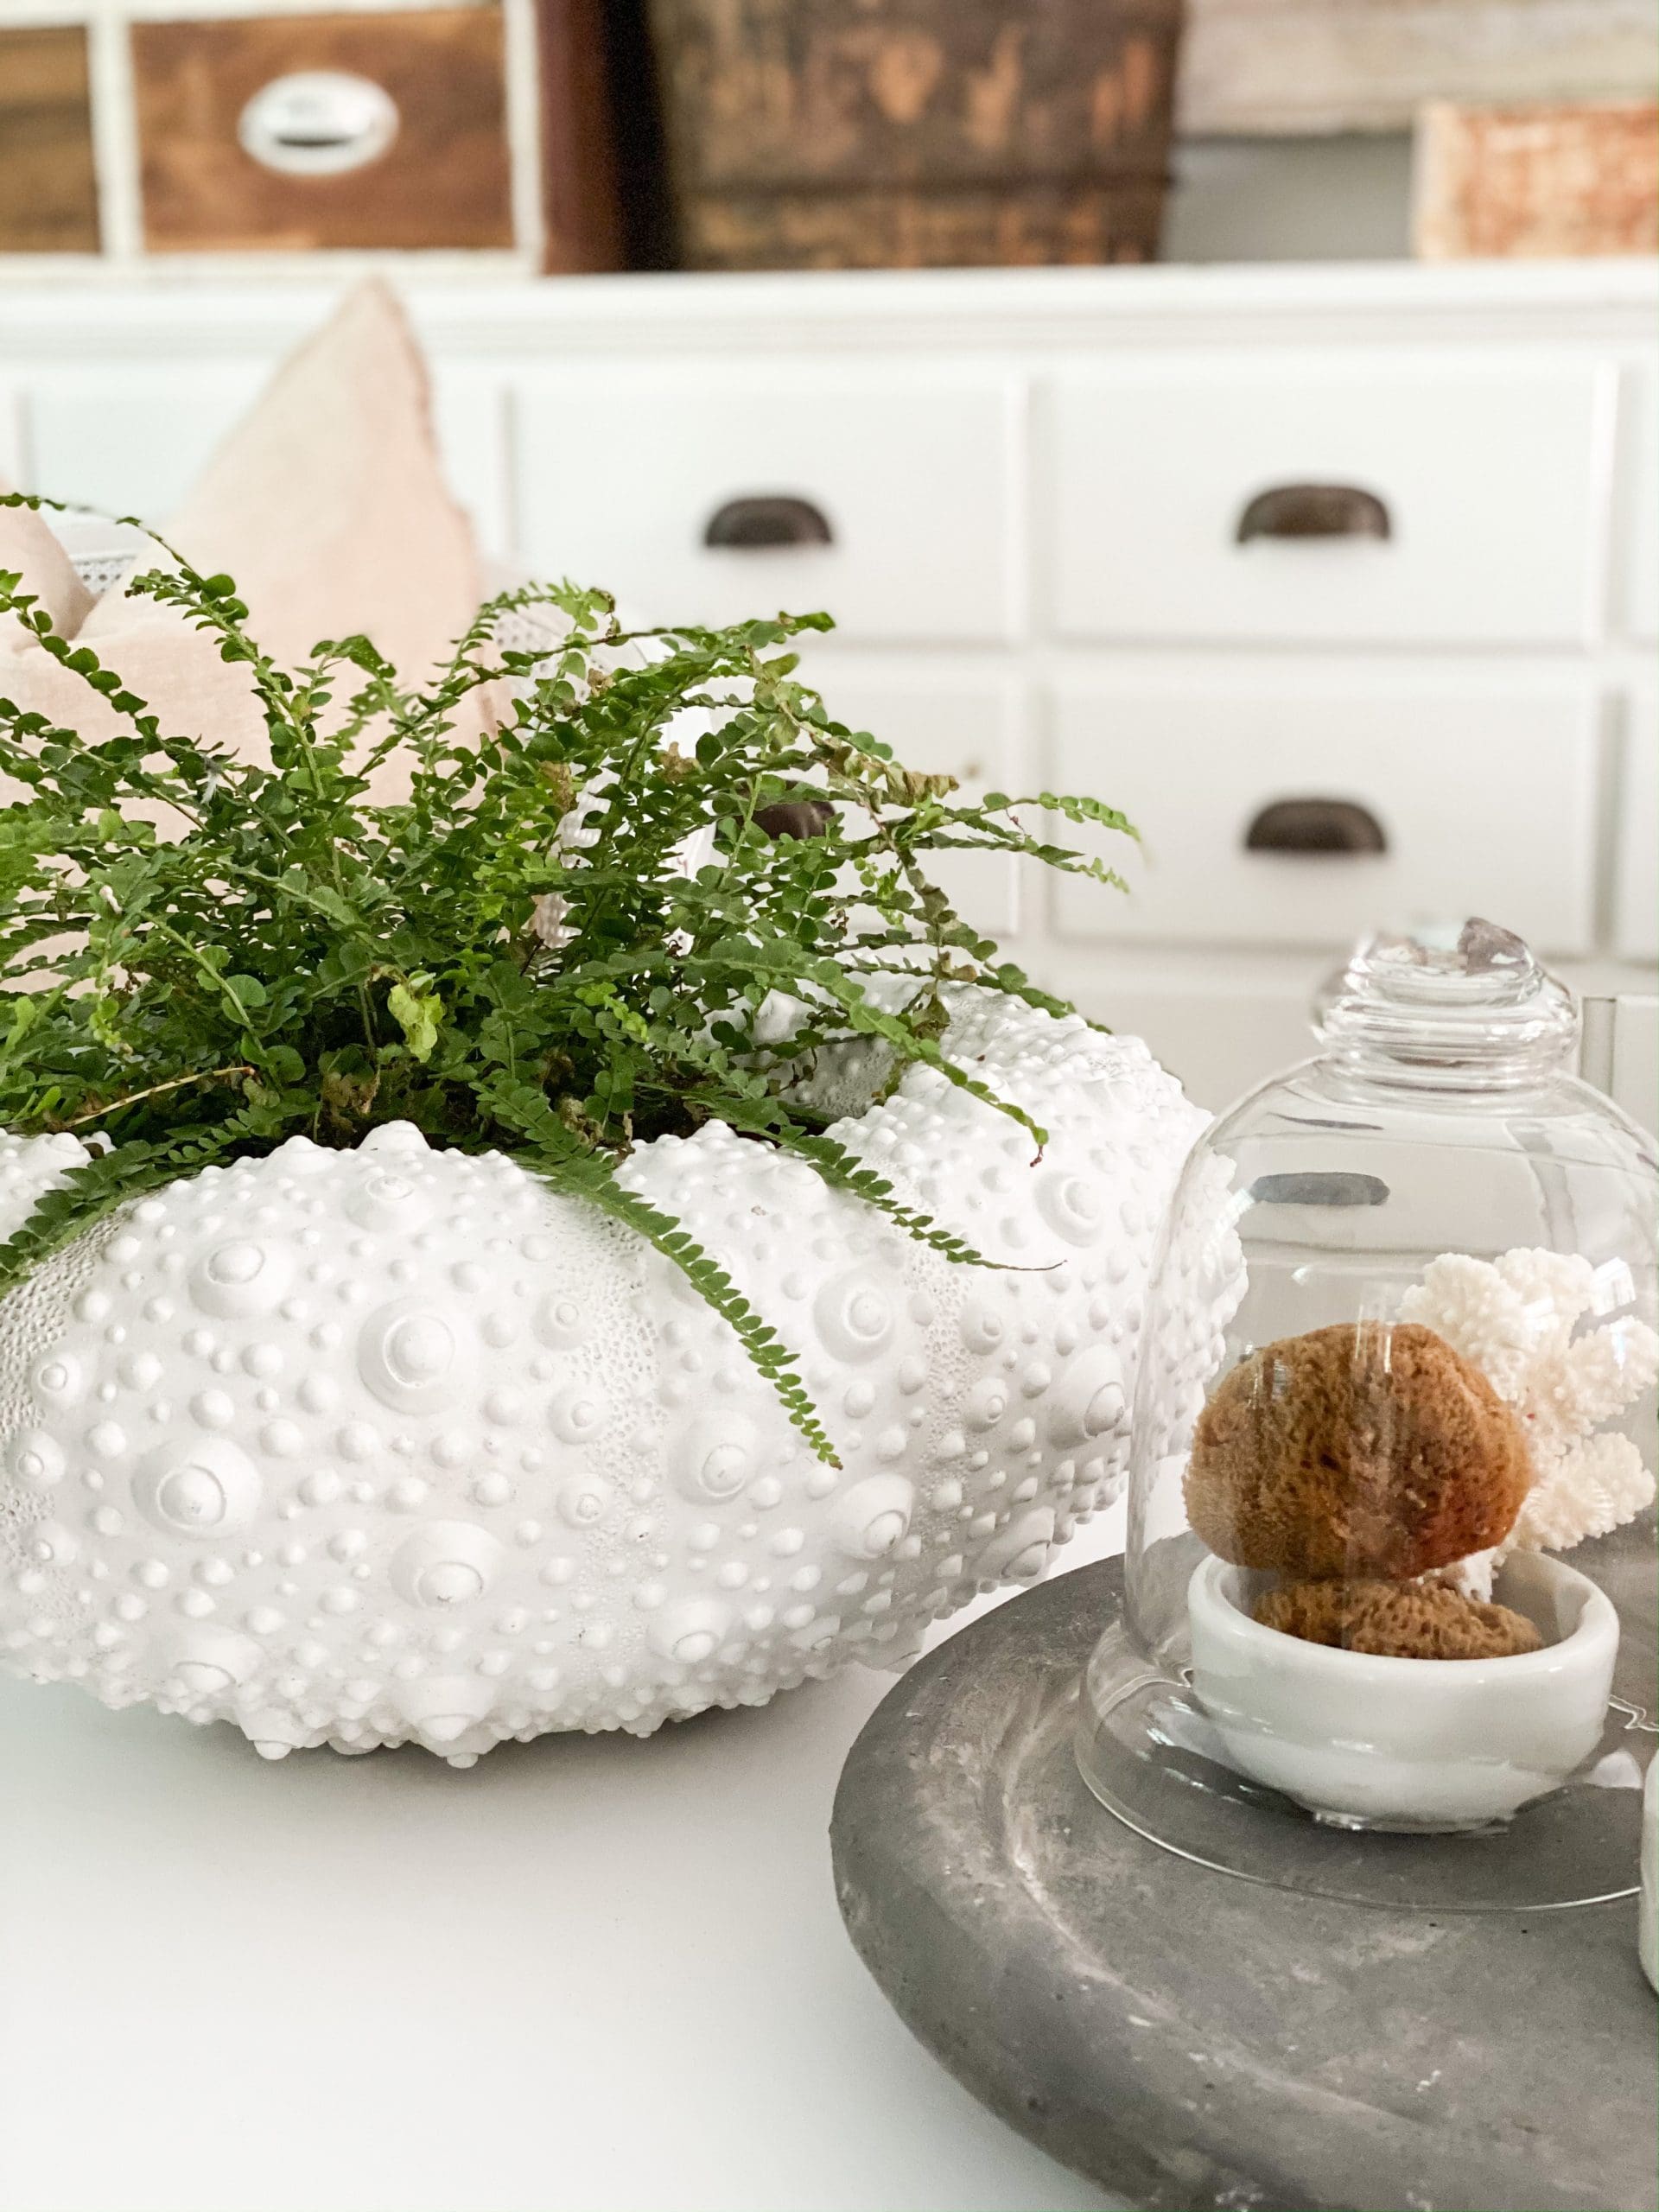 white coastal planter next to a glass cloche with small sea sponges inside